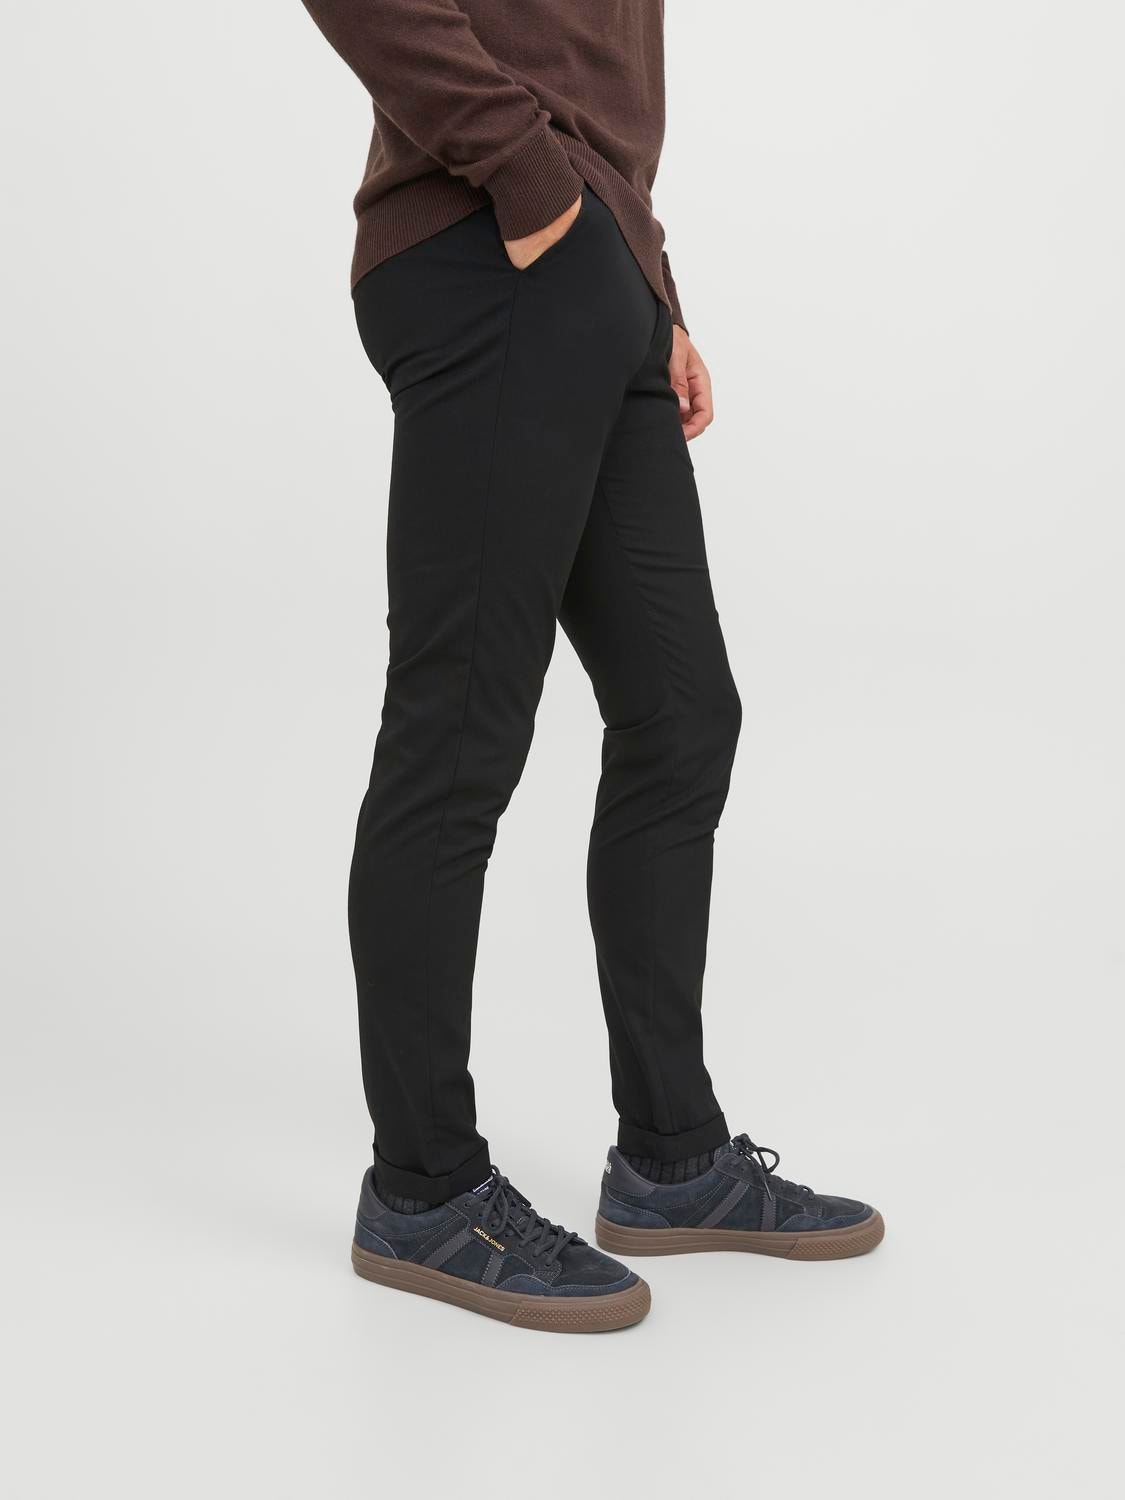 Jack & Jones Slim Fit Chino trousers -Black - 12217907